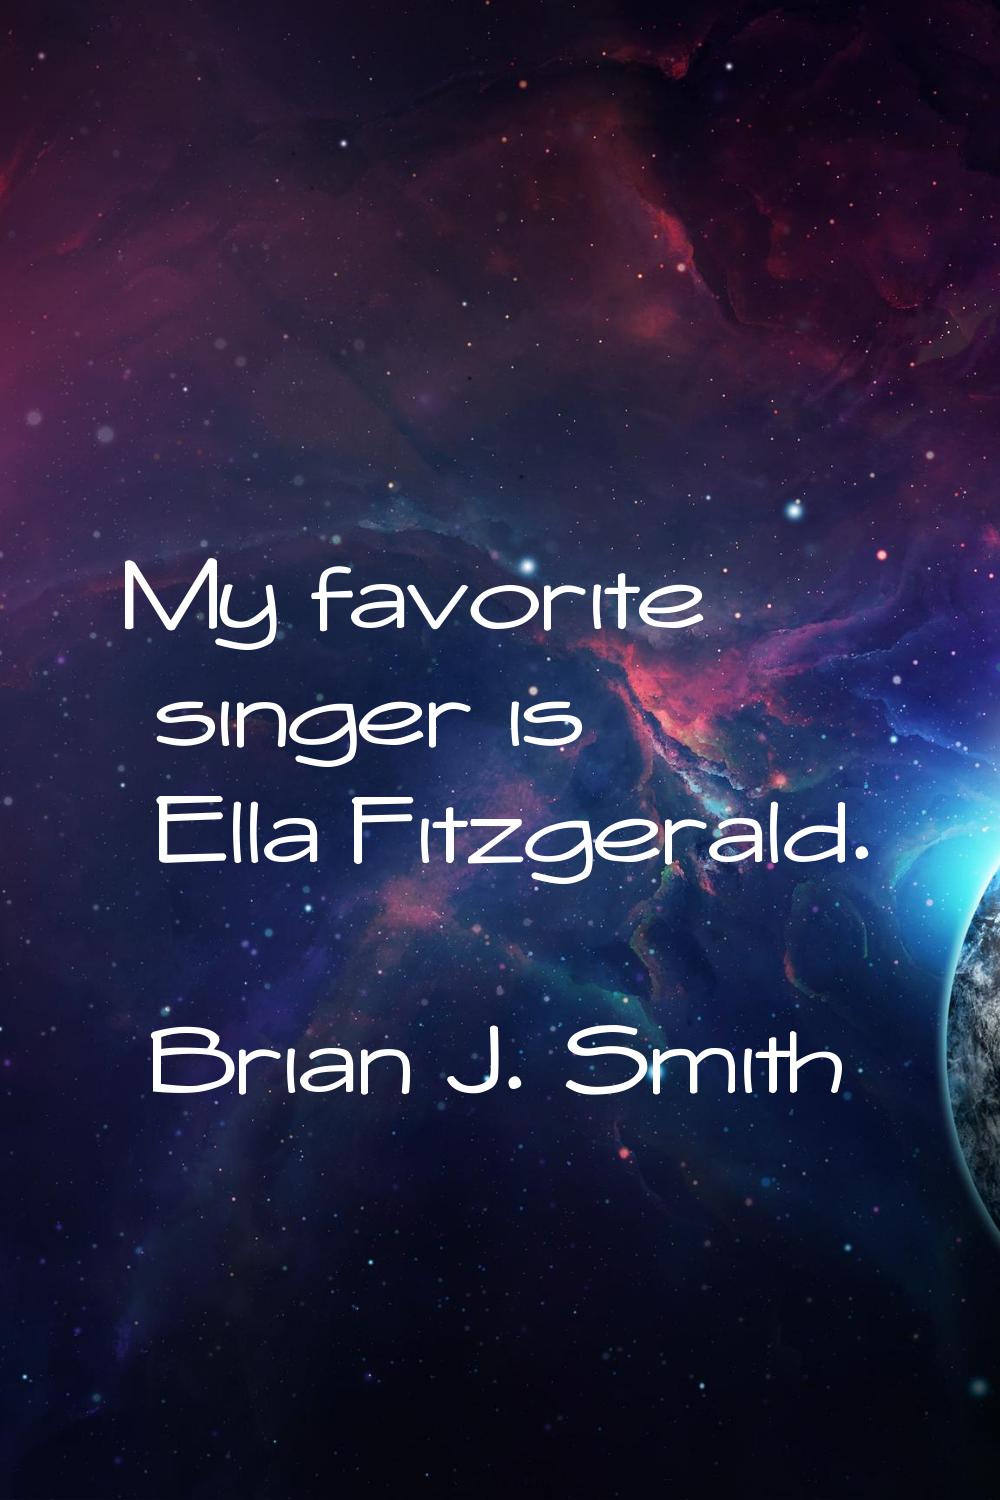 My favorite singer is Ella Fitzgerald.